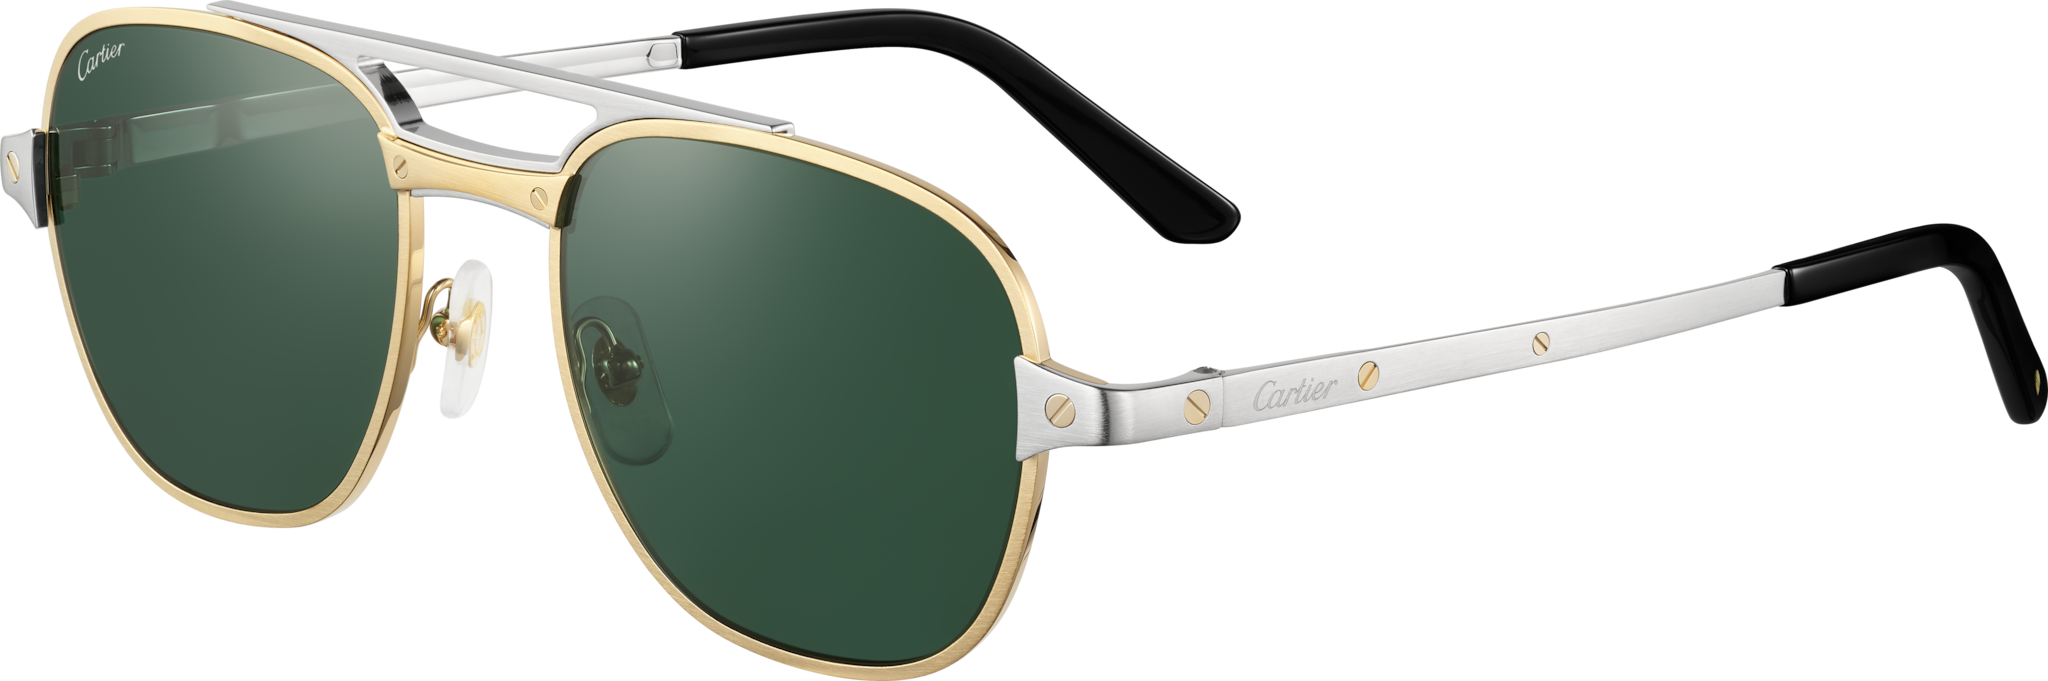 Santos de Cartier SunglassesBushed platinum finish metal, green lenses